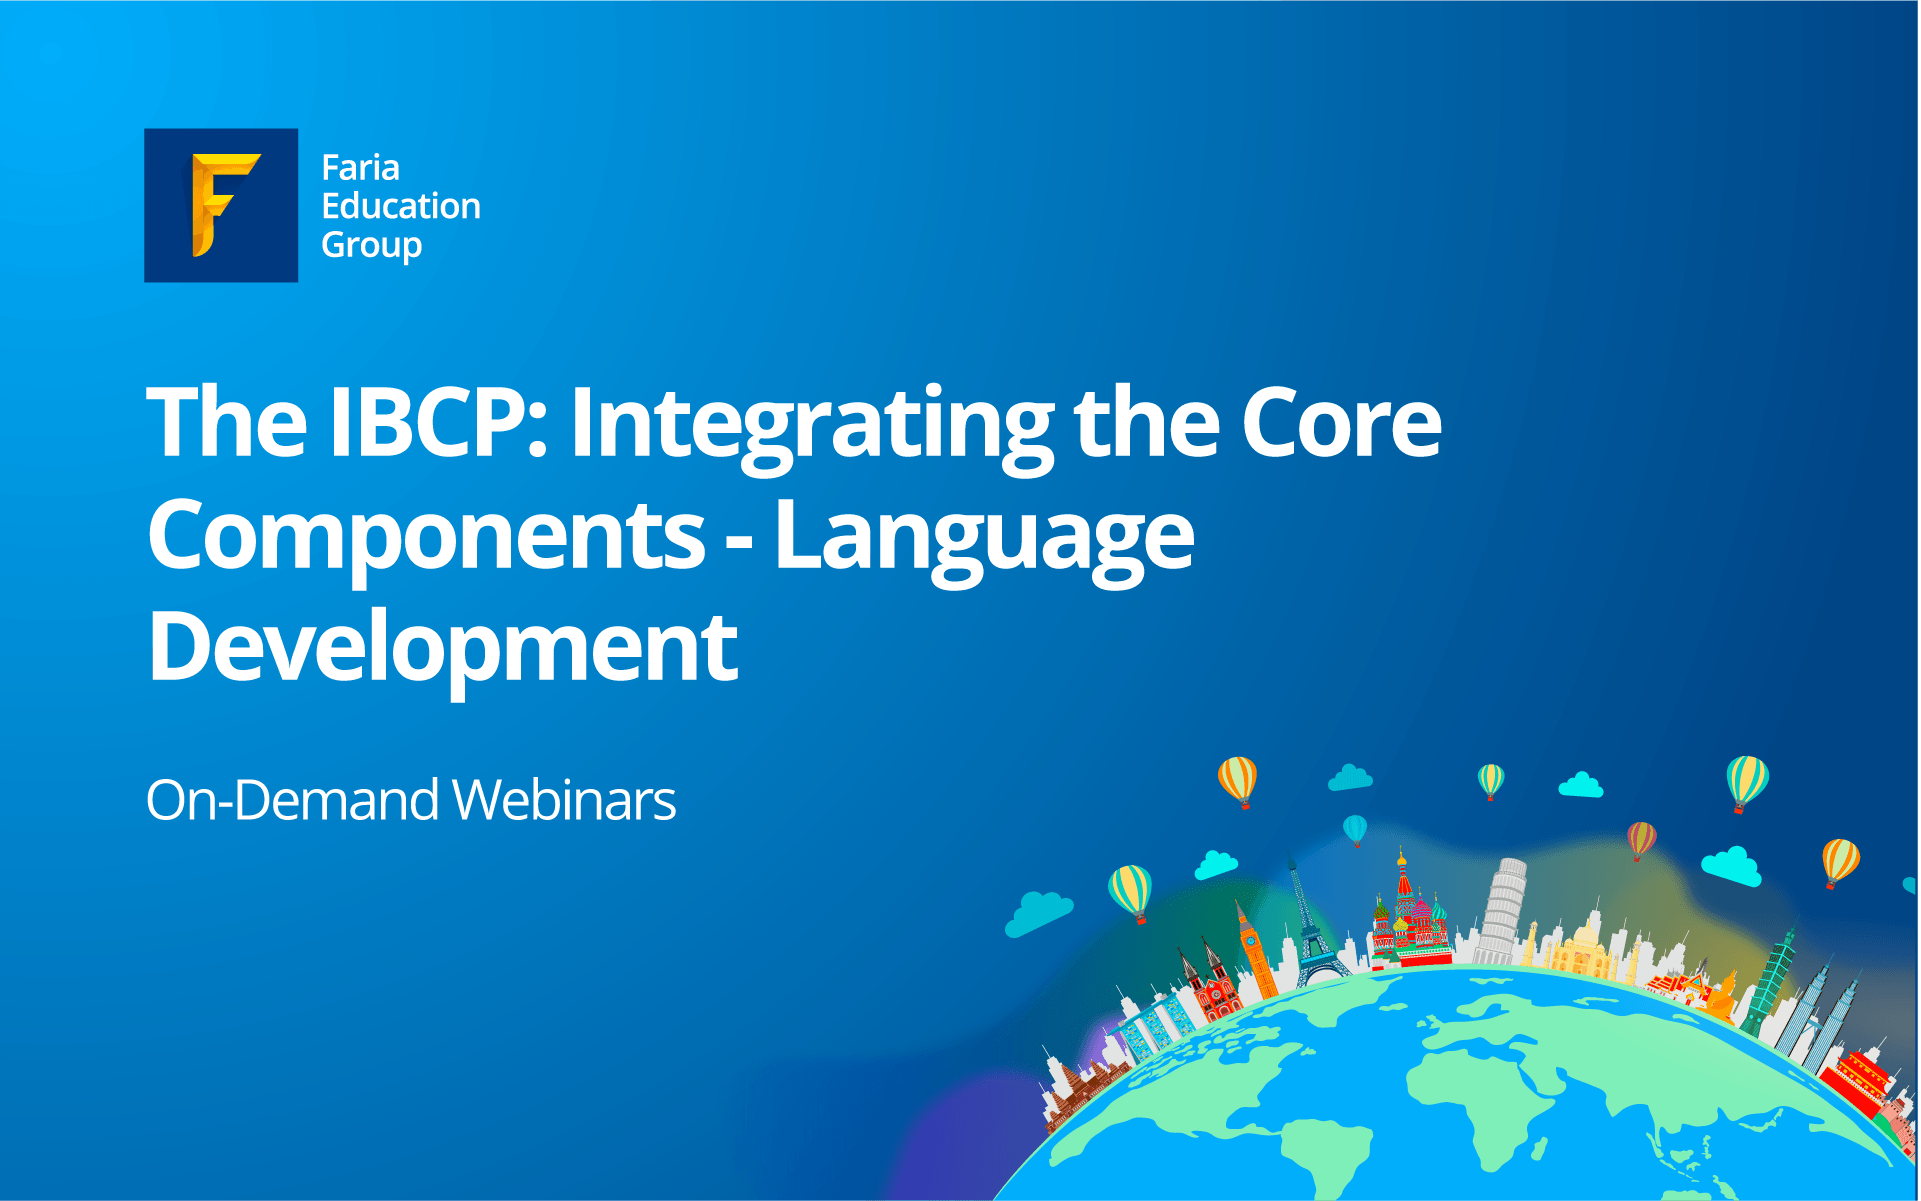 The IBCP: Integrating the Core Components - Language Development